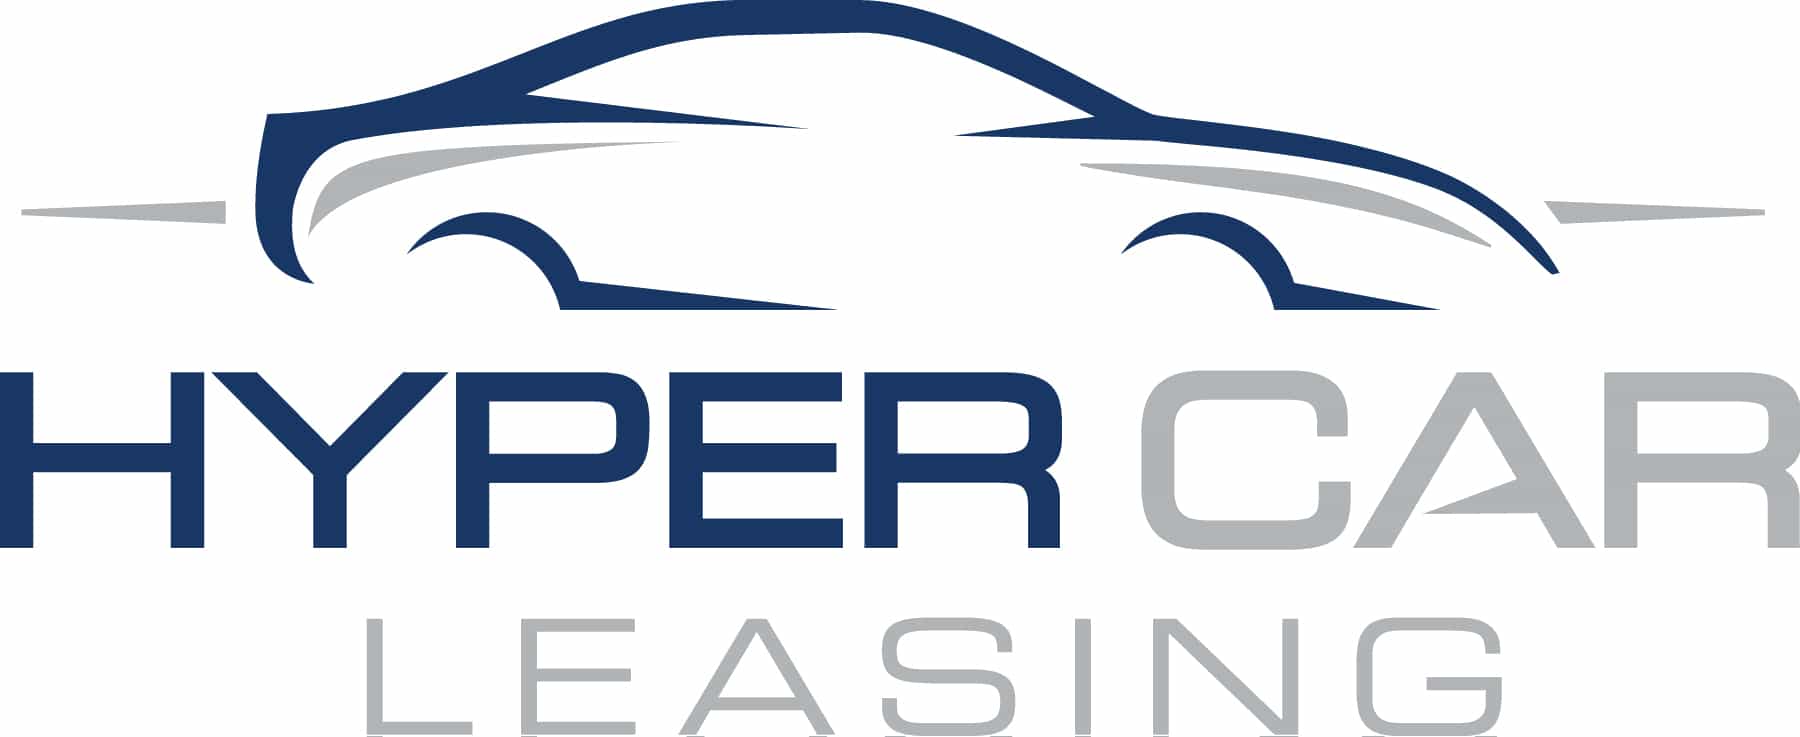 Sleek Car Logo - Car Leasing Company Logo Design | How We Designed It